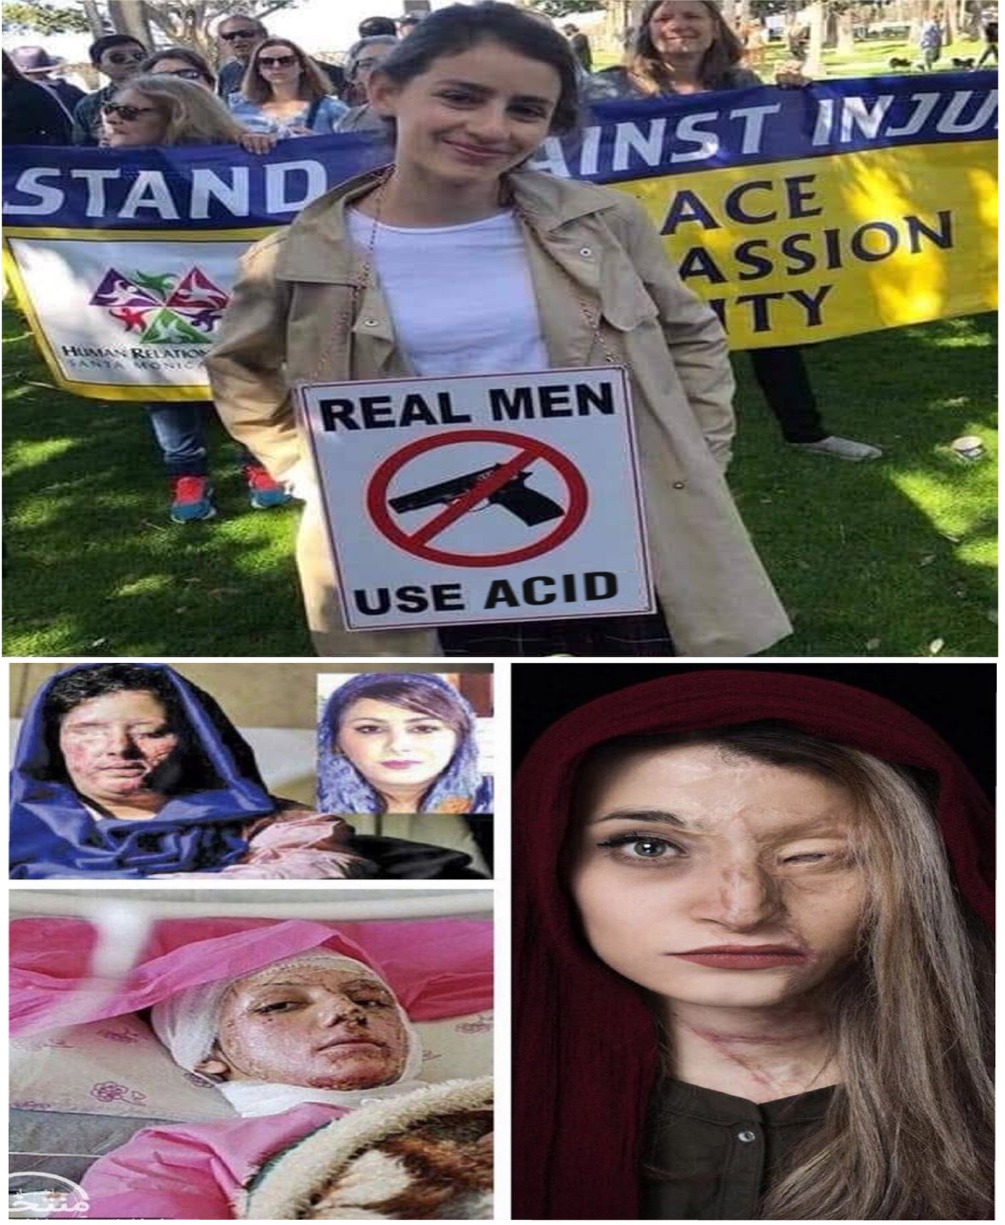 girl - Inst Inju Stand Ce Ssion Lity Real Men Use Acid